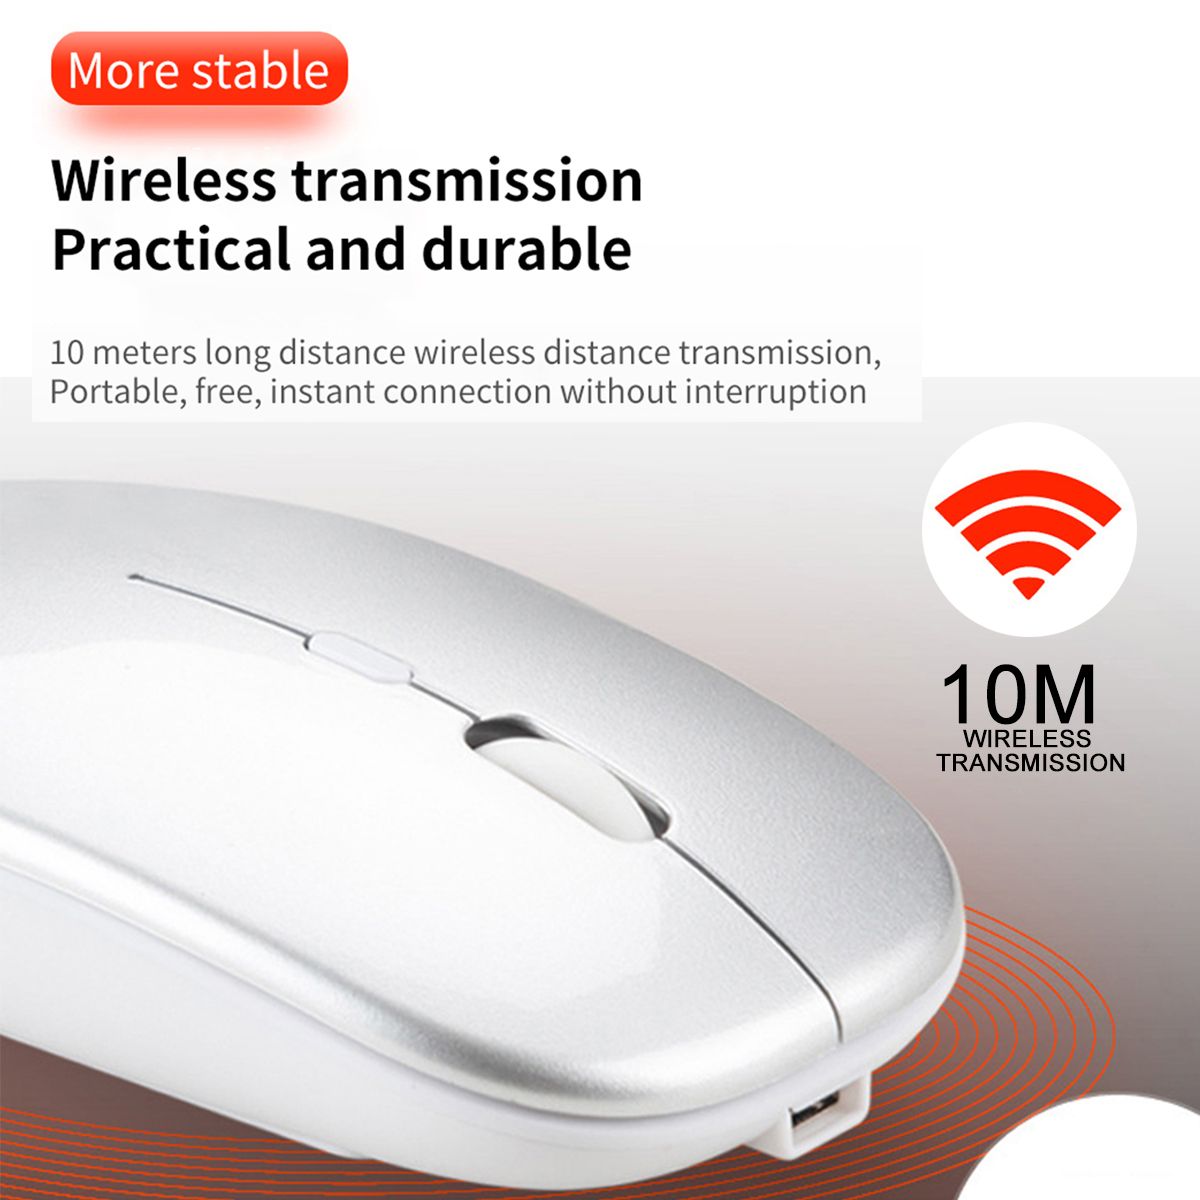 1600DPI--Ultrathin-Ergonomically-Designed-24-GHz-Wireless-Mouse-for-Office-PC-Laptop-1605153